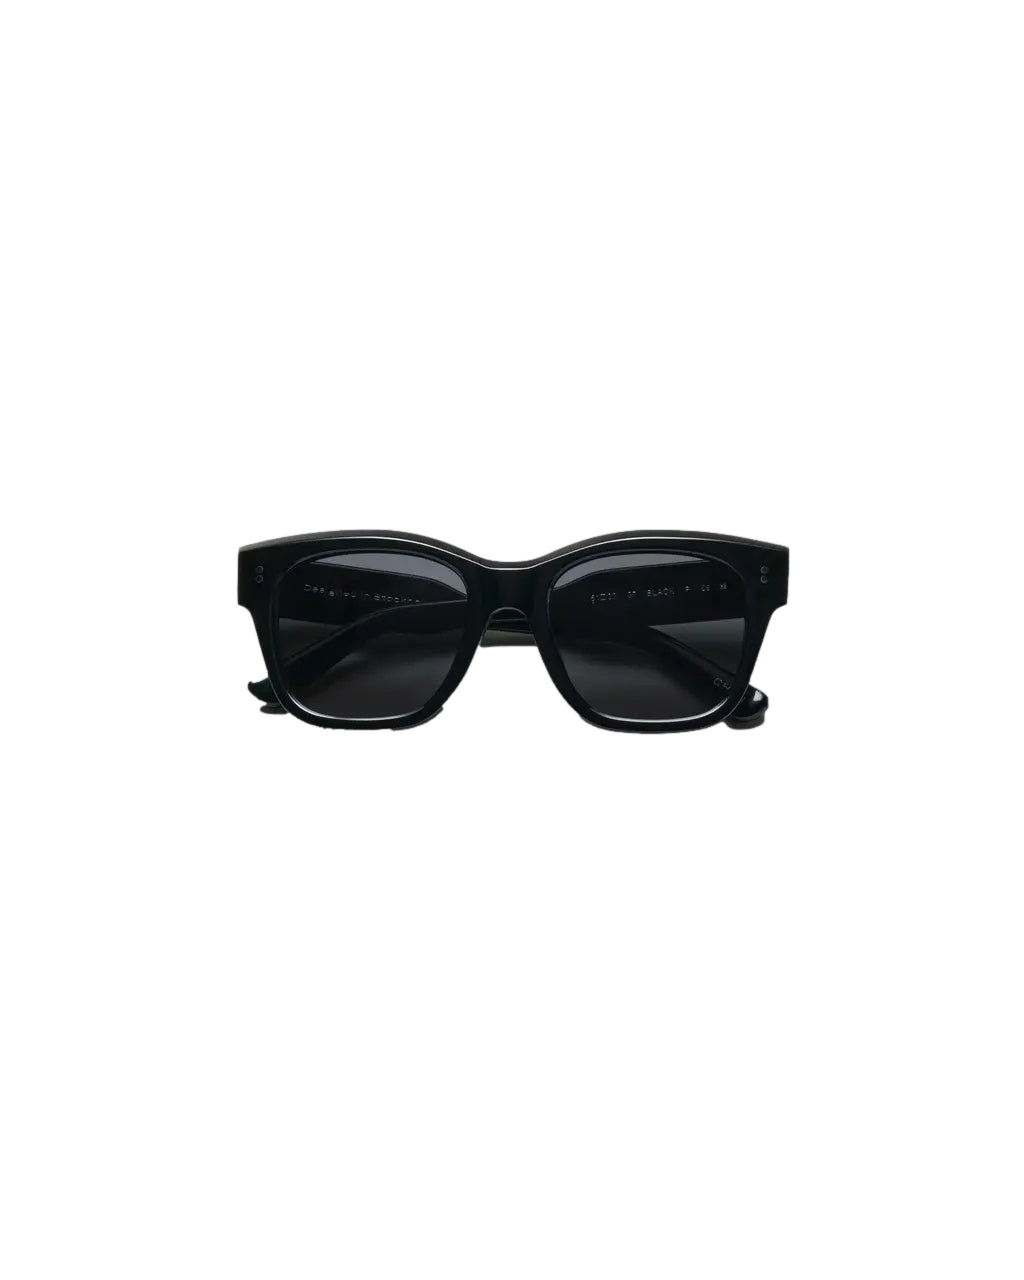 Chimi Eyewear 07 Black Solbriller Sort